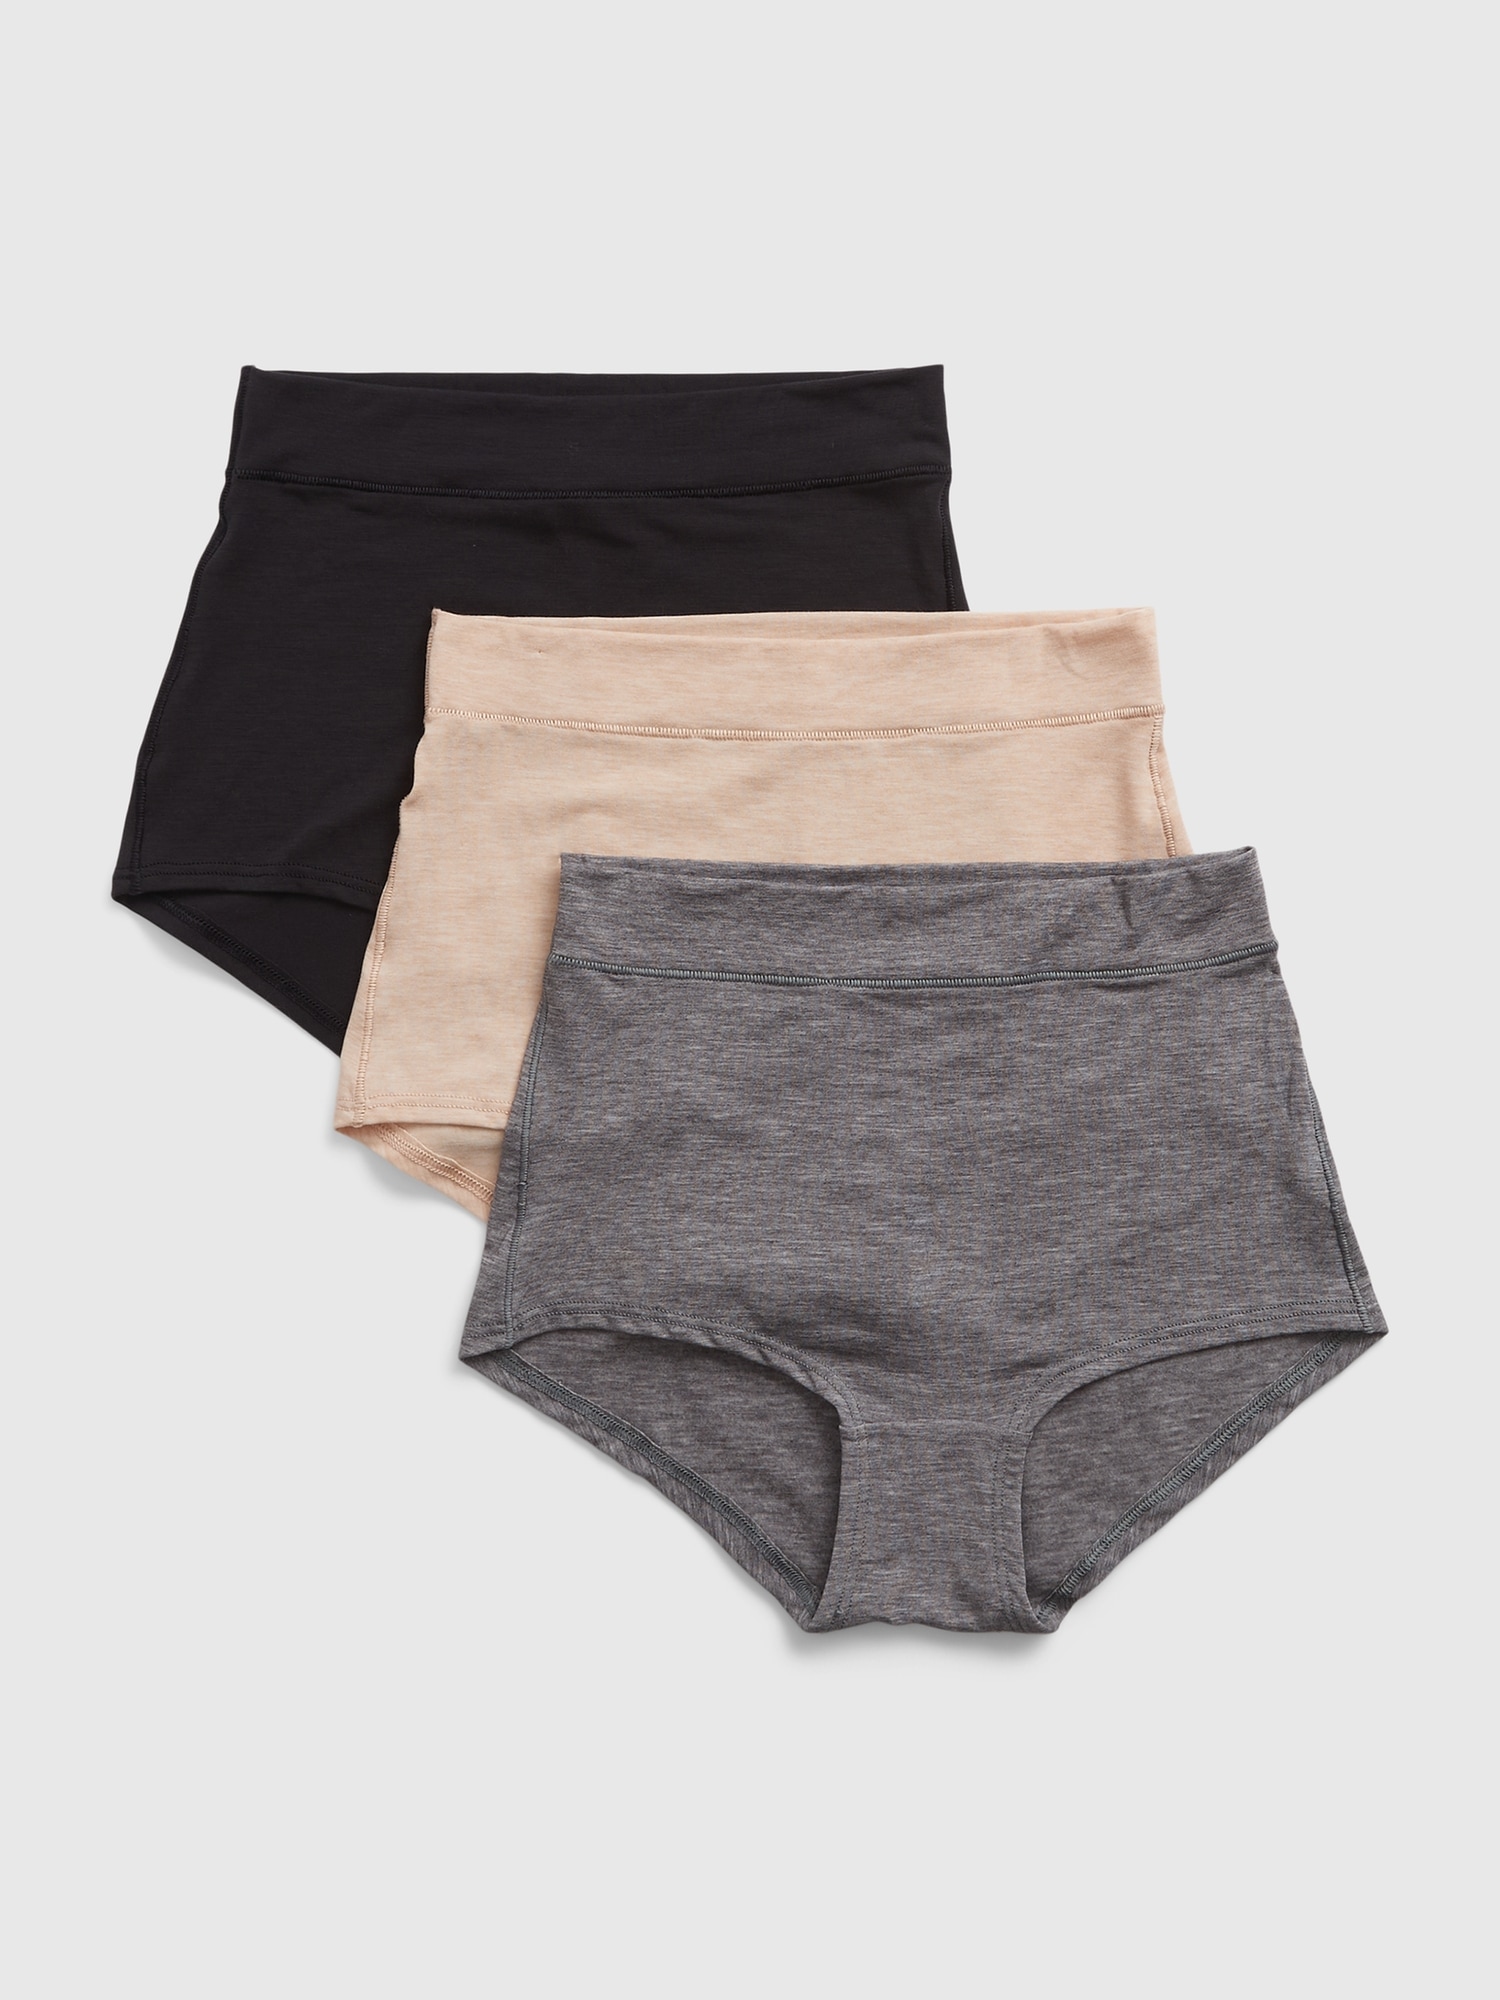  Underwear, Cotton Boyshort Panties For Women, Assorted  Colors, 3-Pack, Denim Heather/Grey Heather/Pink Stripe